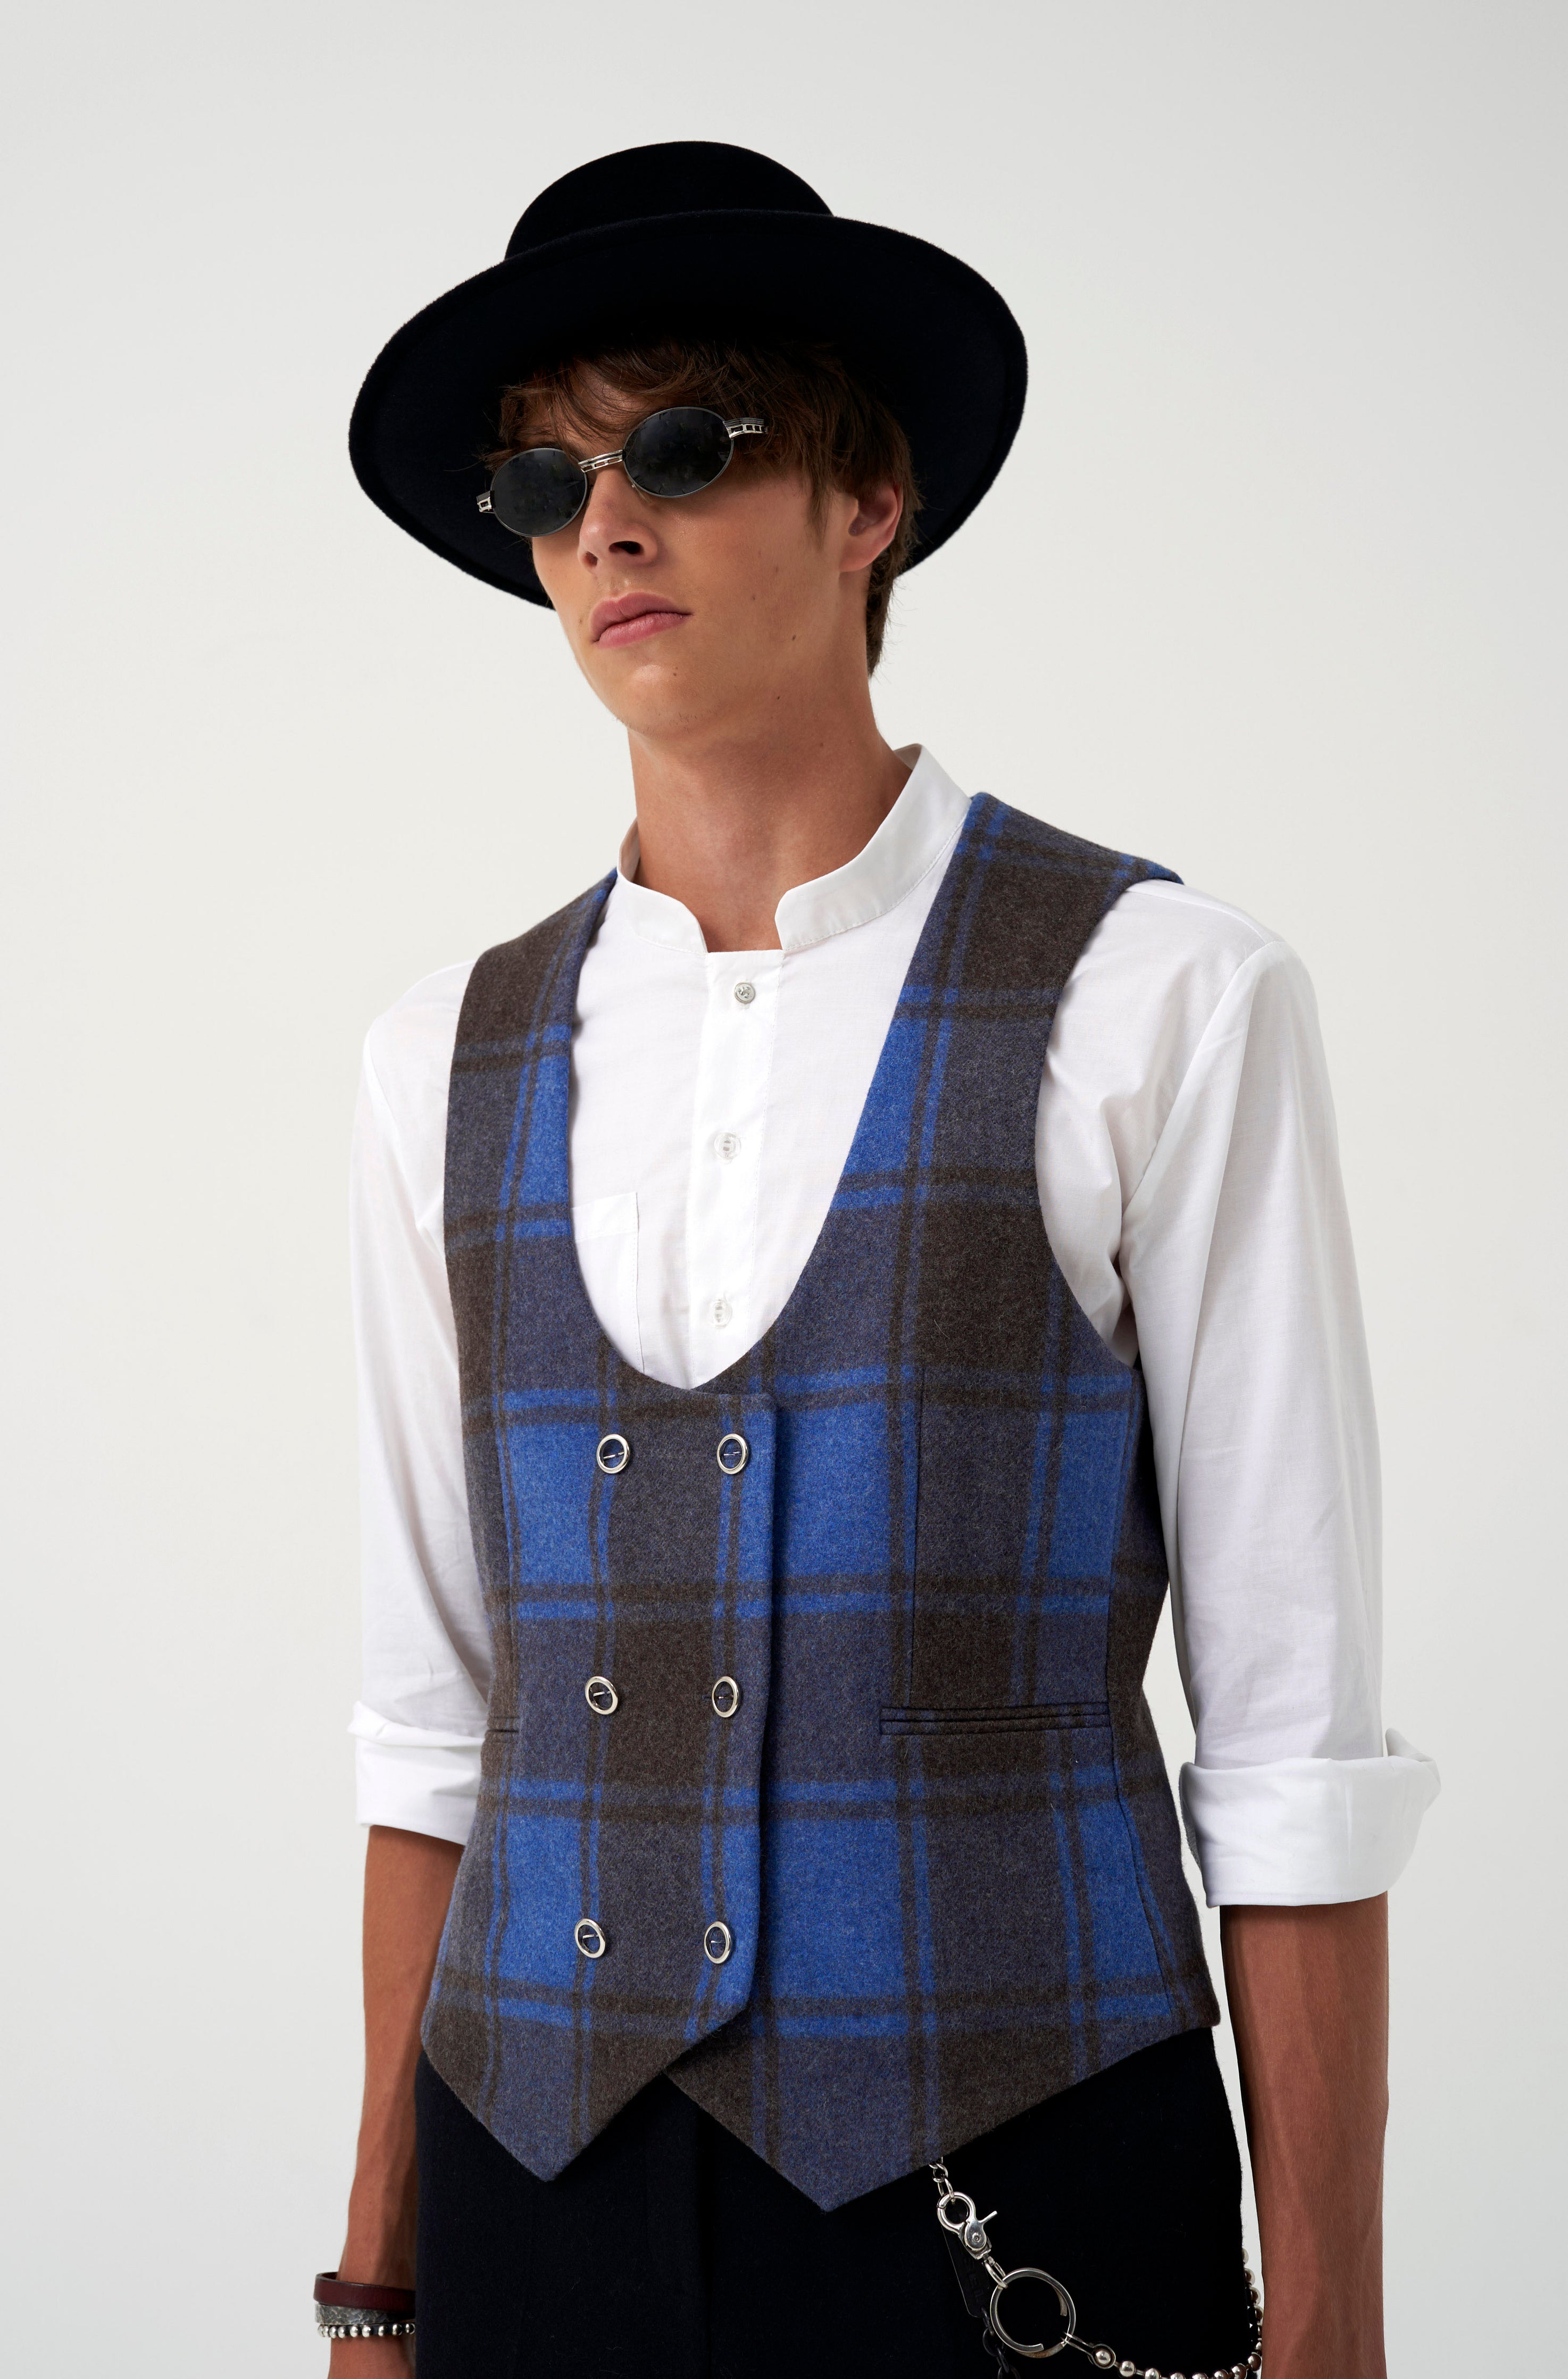 Unisex wool waistcoat